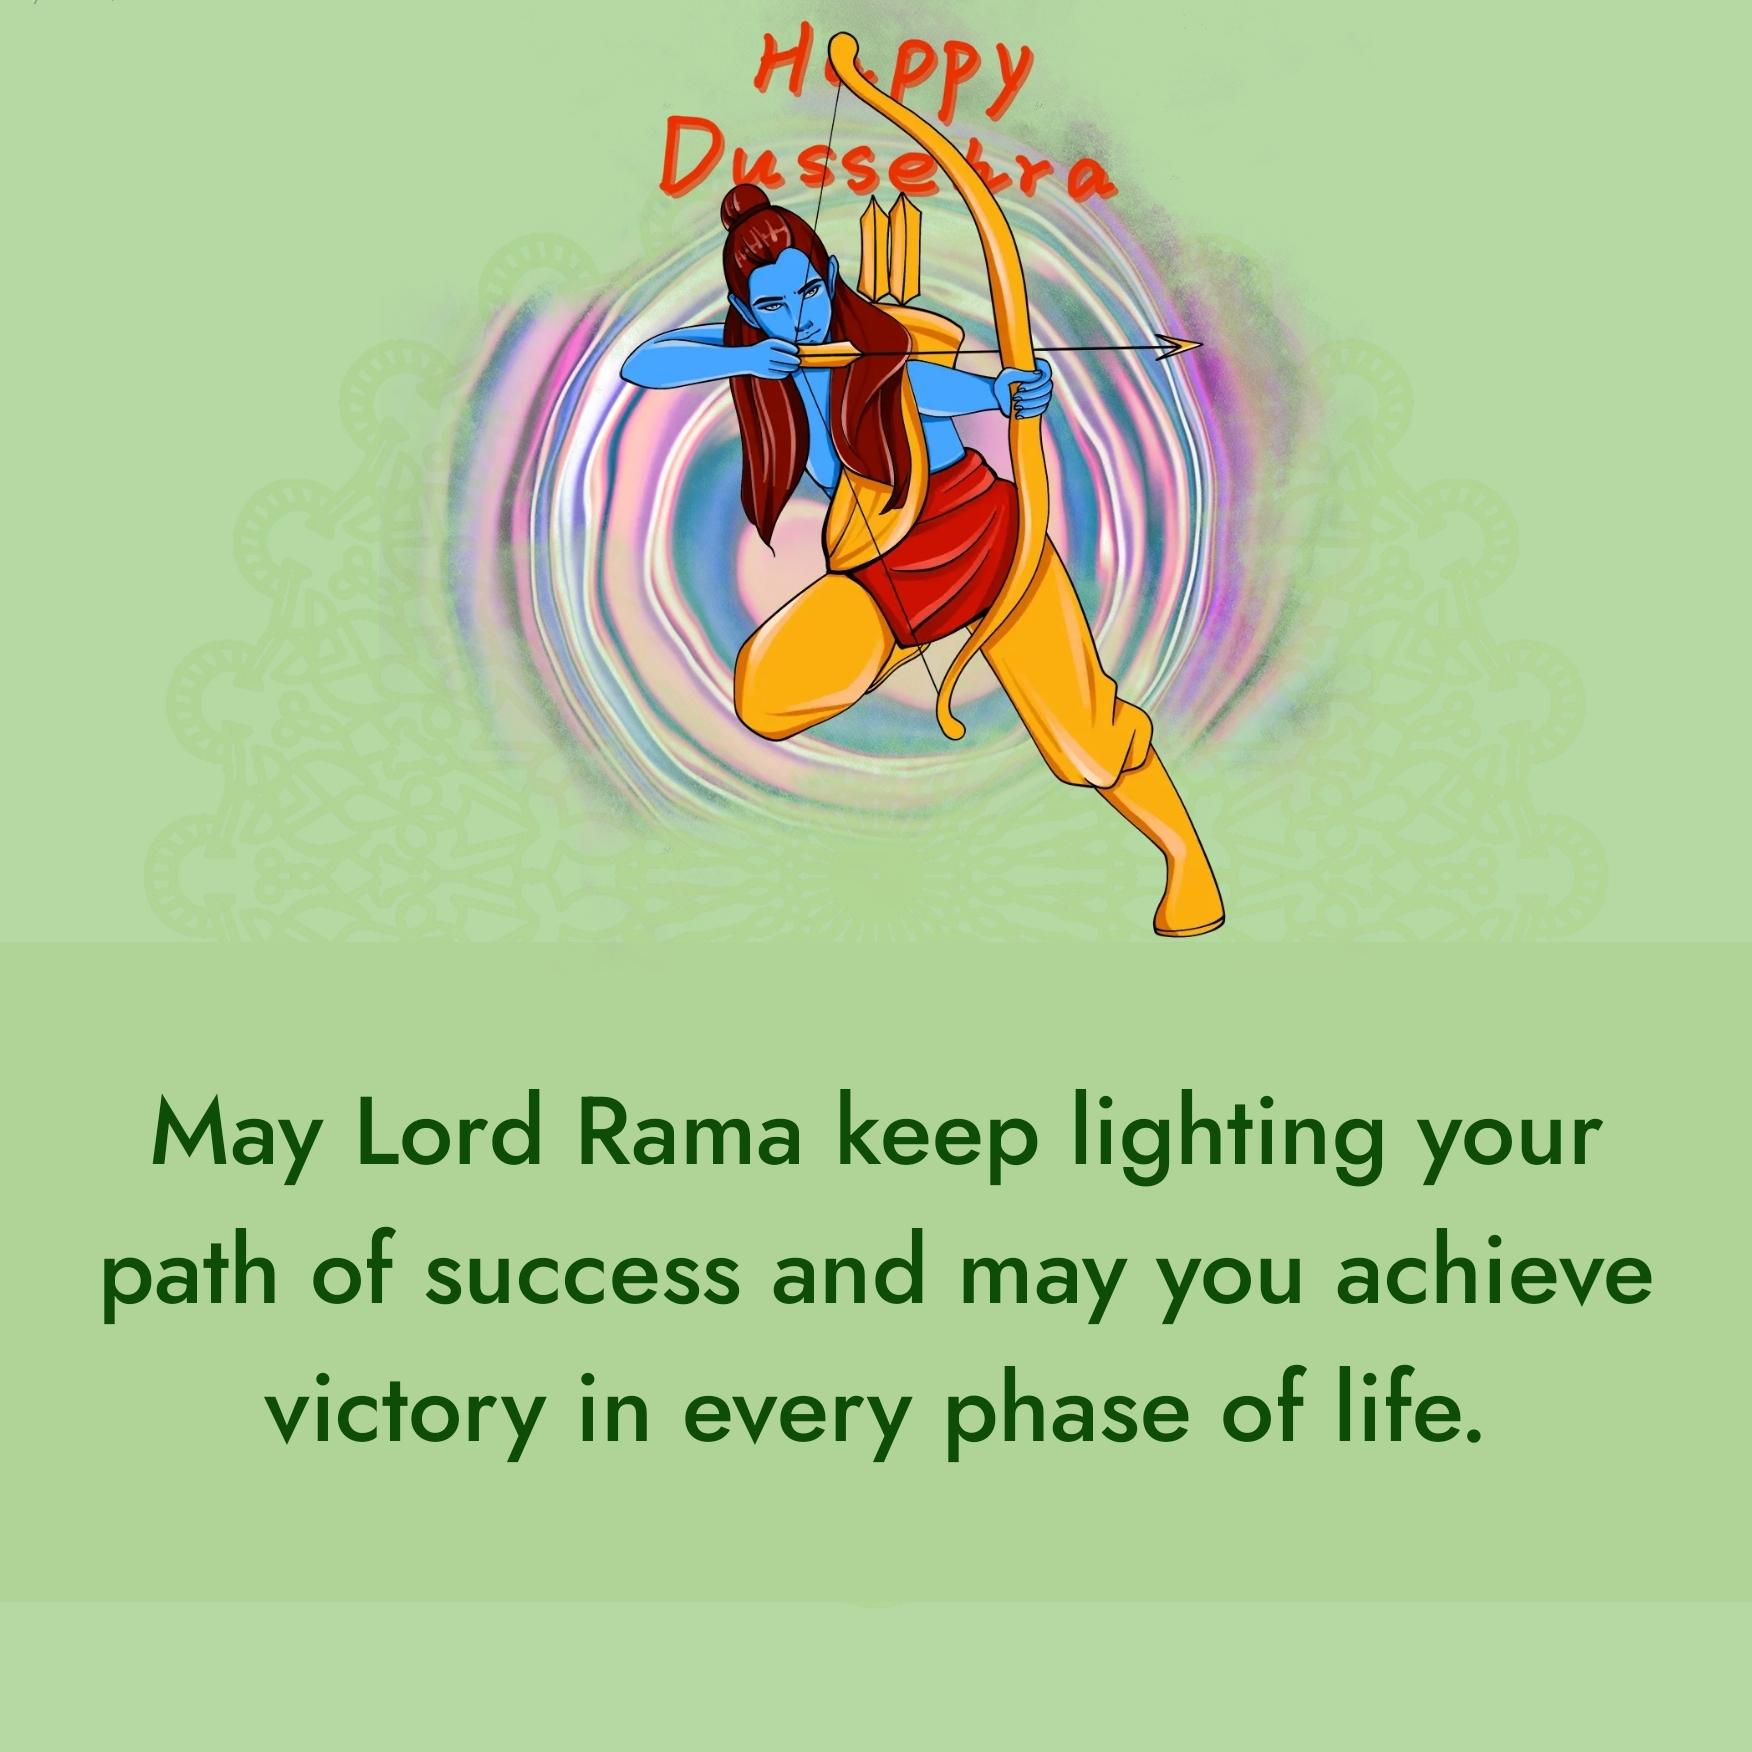 May Lord Rama keep lighting your path of success